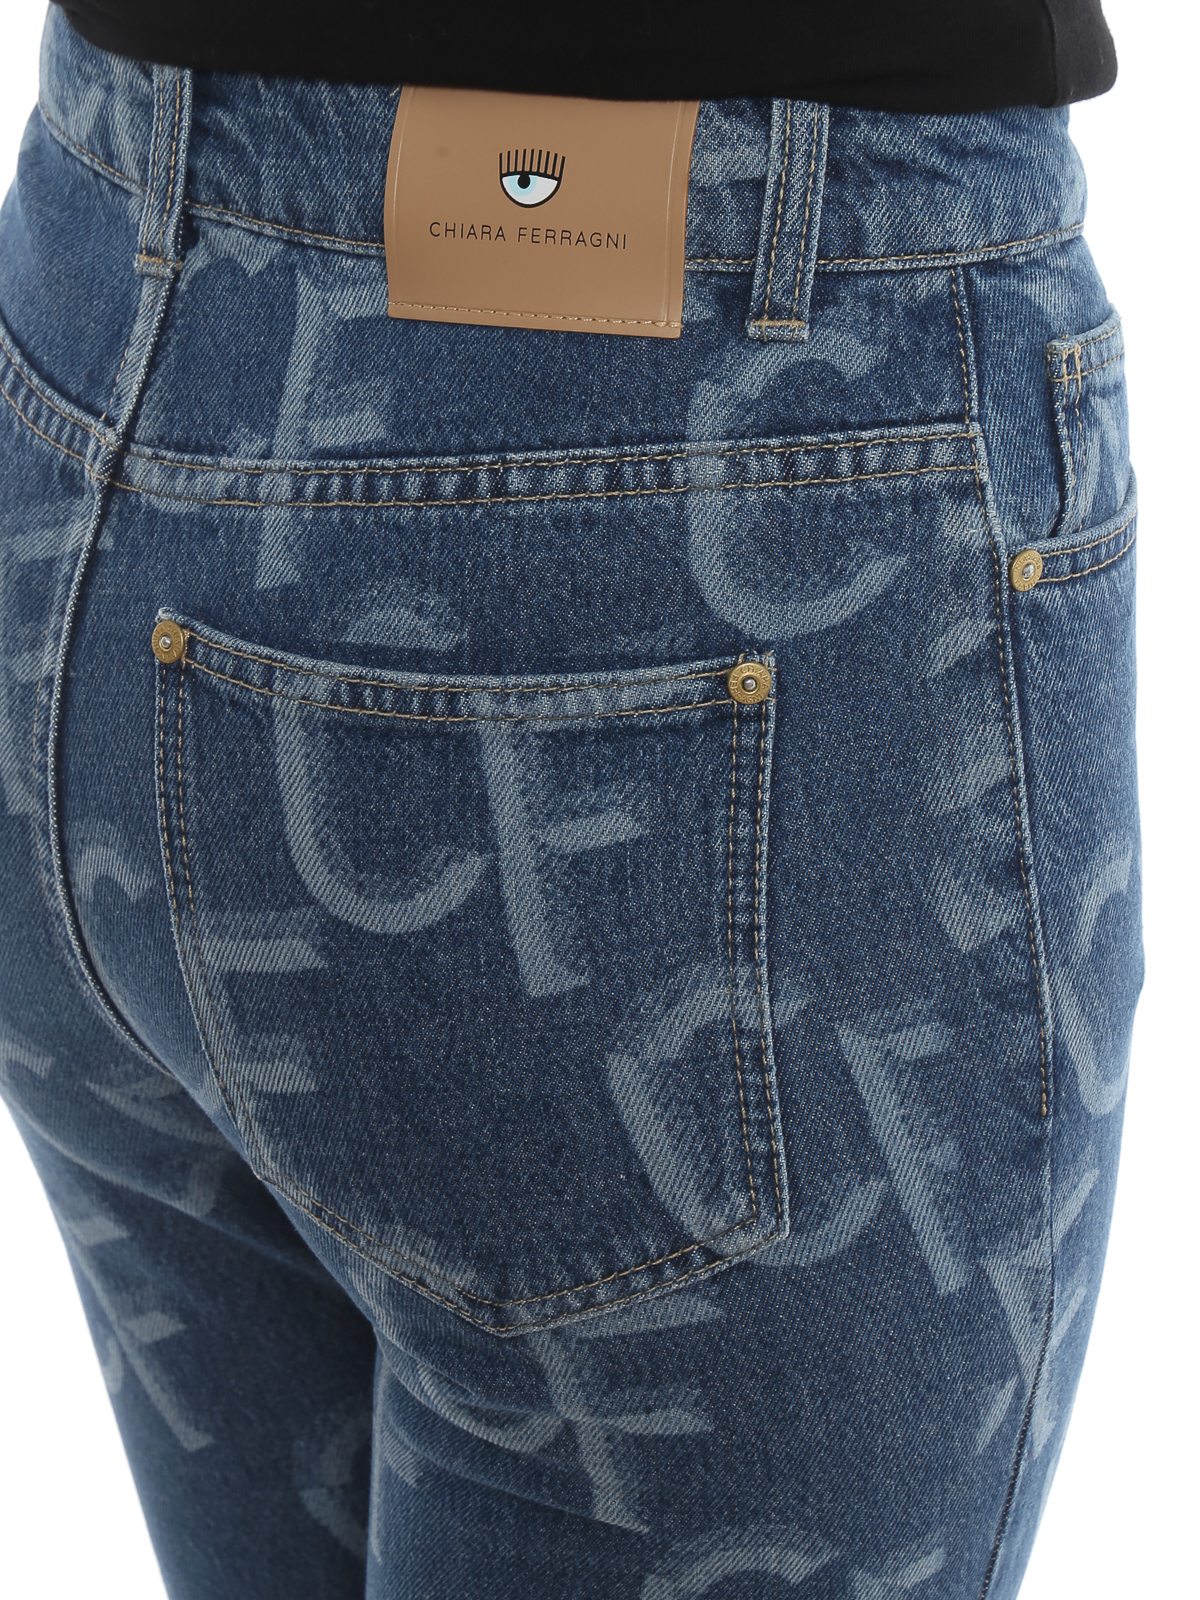 Straight leg jeans Chiara Ferragni - High rise CF monogram denim jeans -  CFJS009DENIM